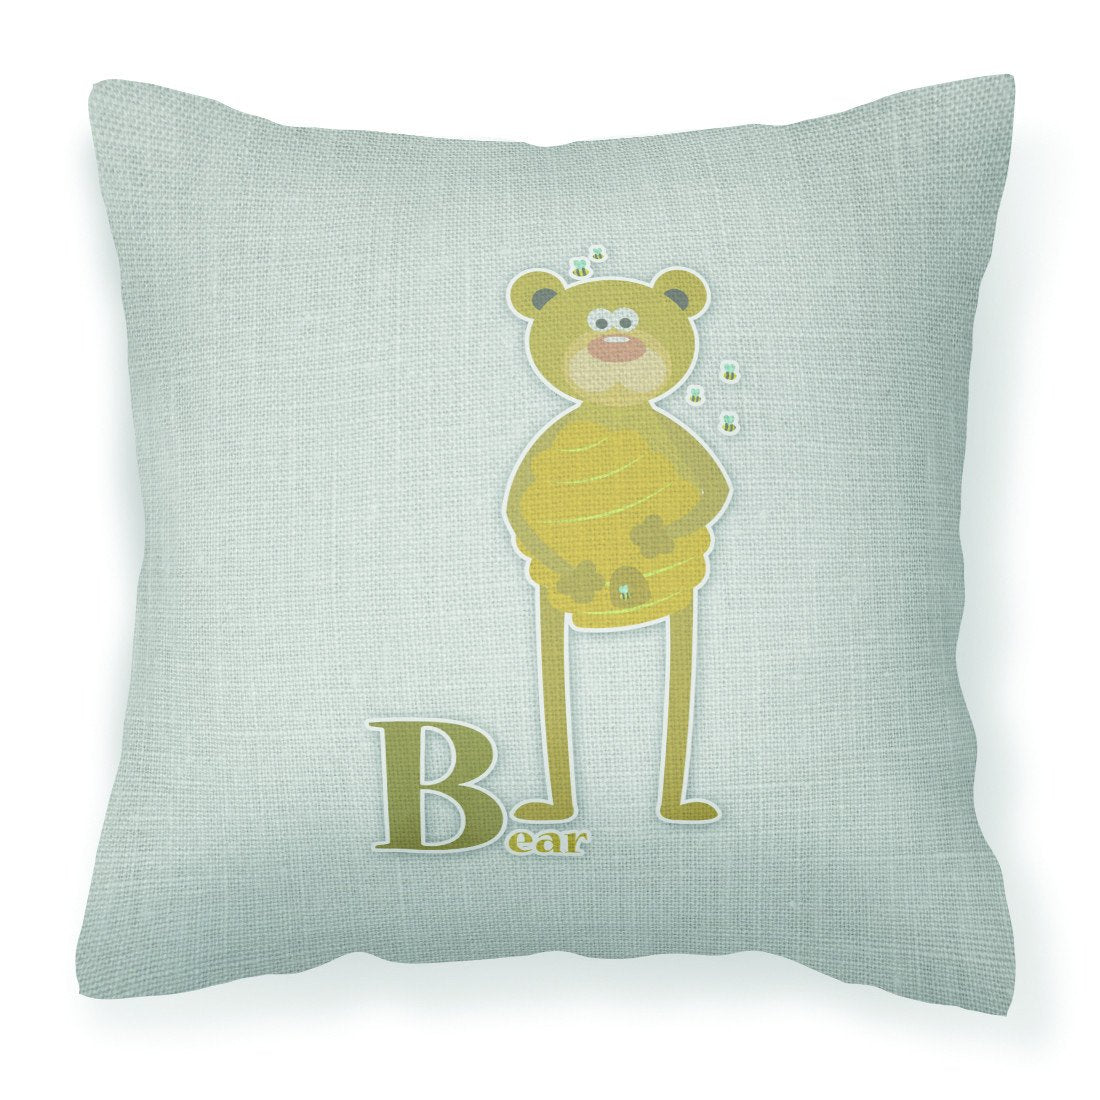 Alphabet B for Bear Fabric Decorative Pillow BB5727PW1818 by Caroline's Treasures